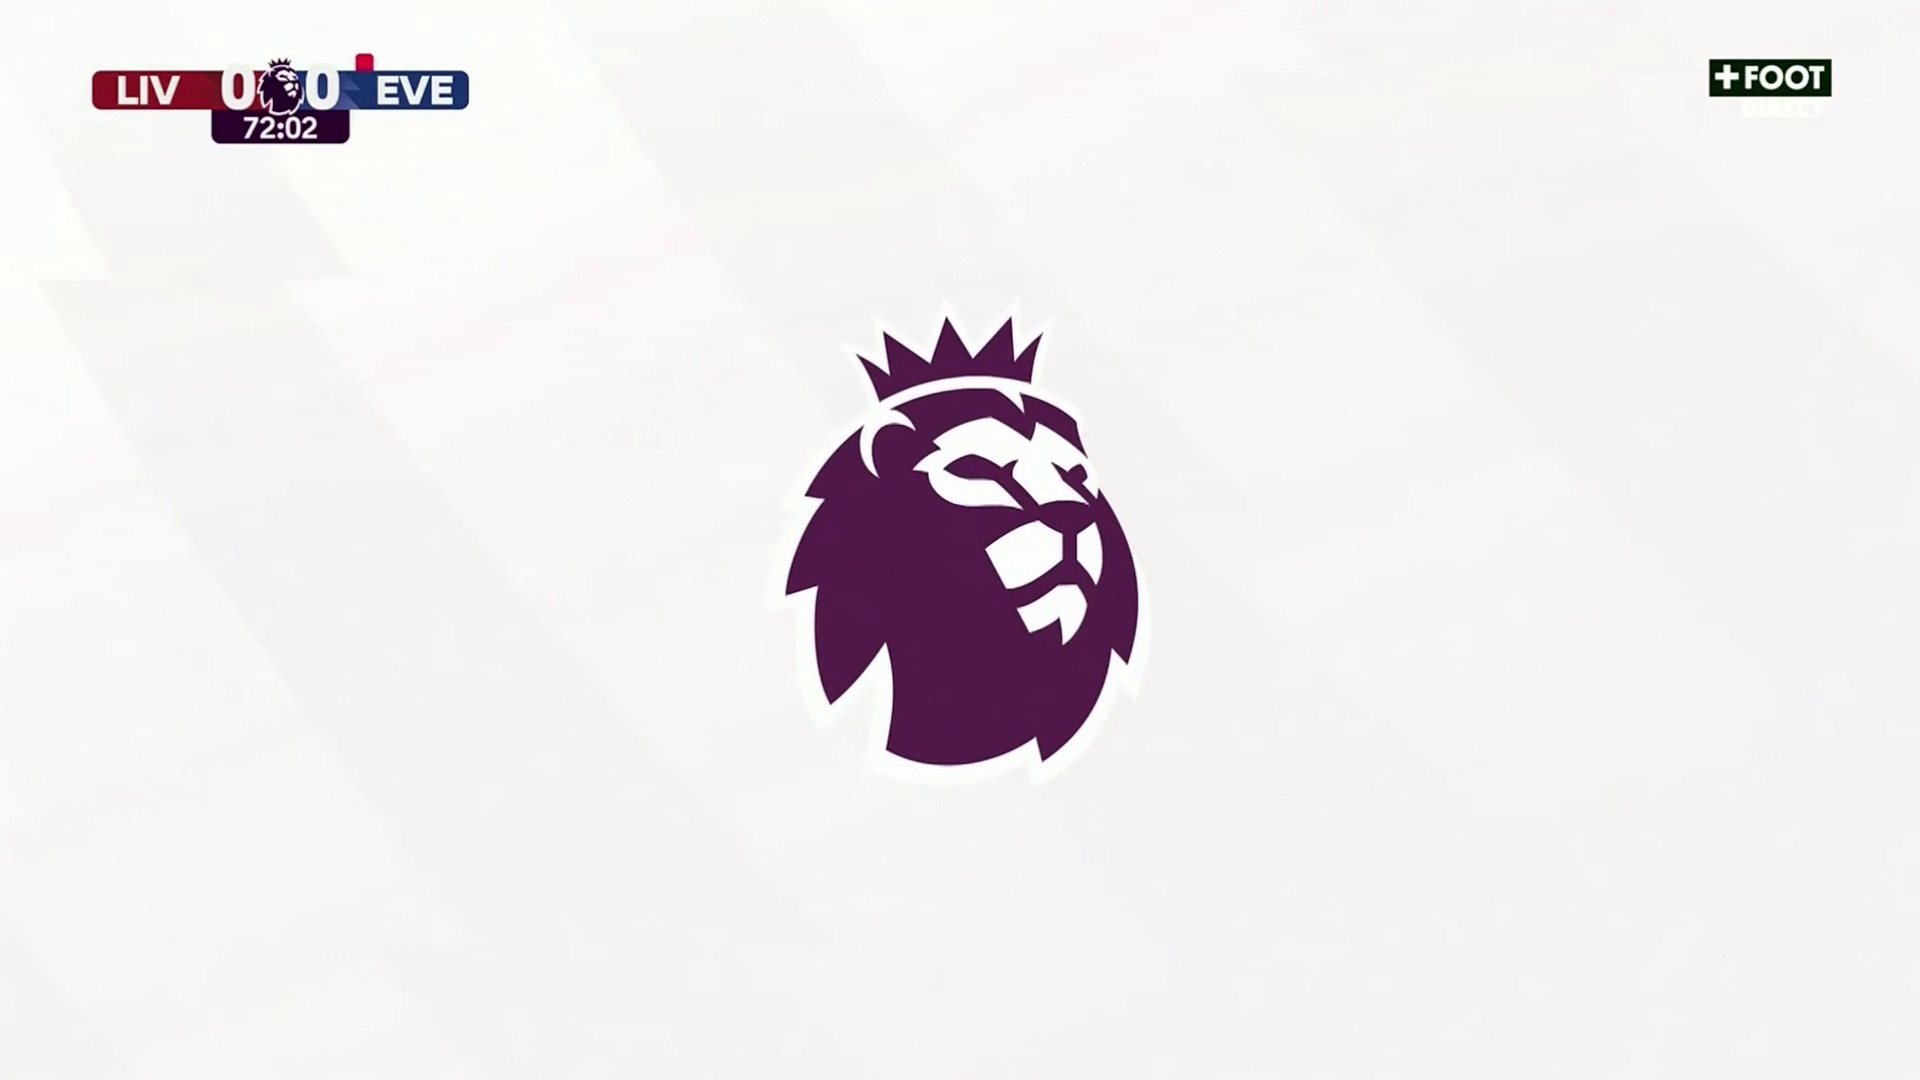 Liverpool [1] - 0 Everton - Mohamed Salah penalty 75'